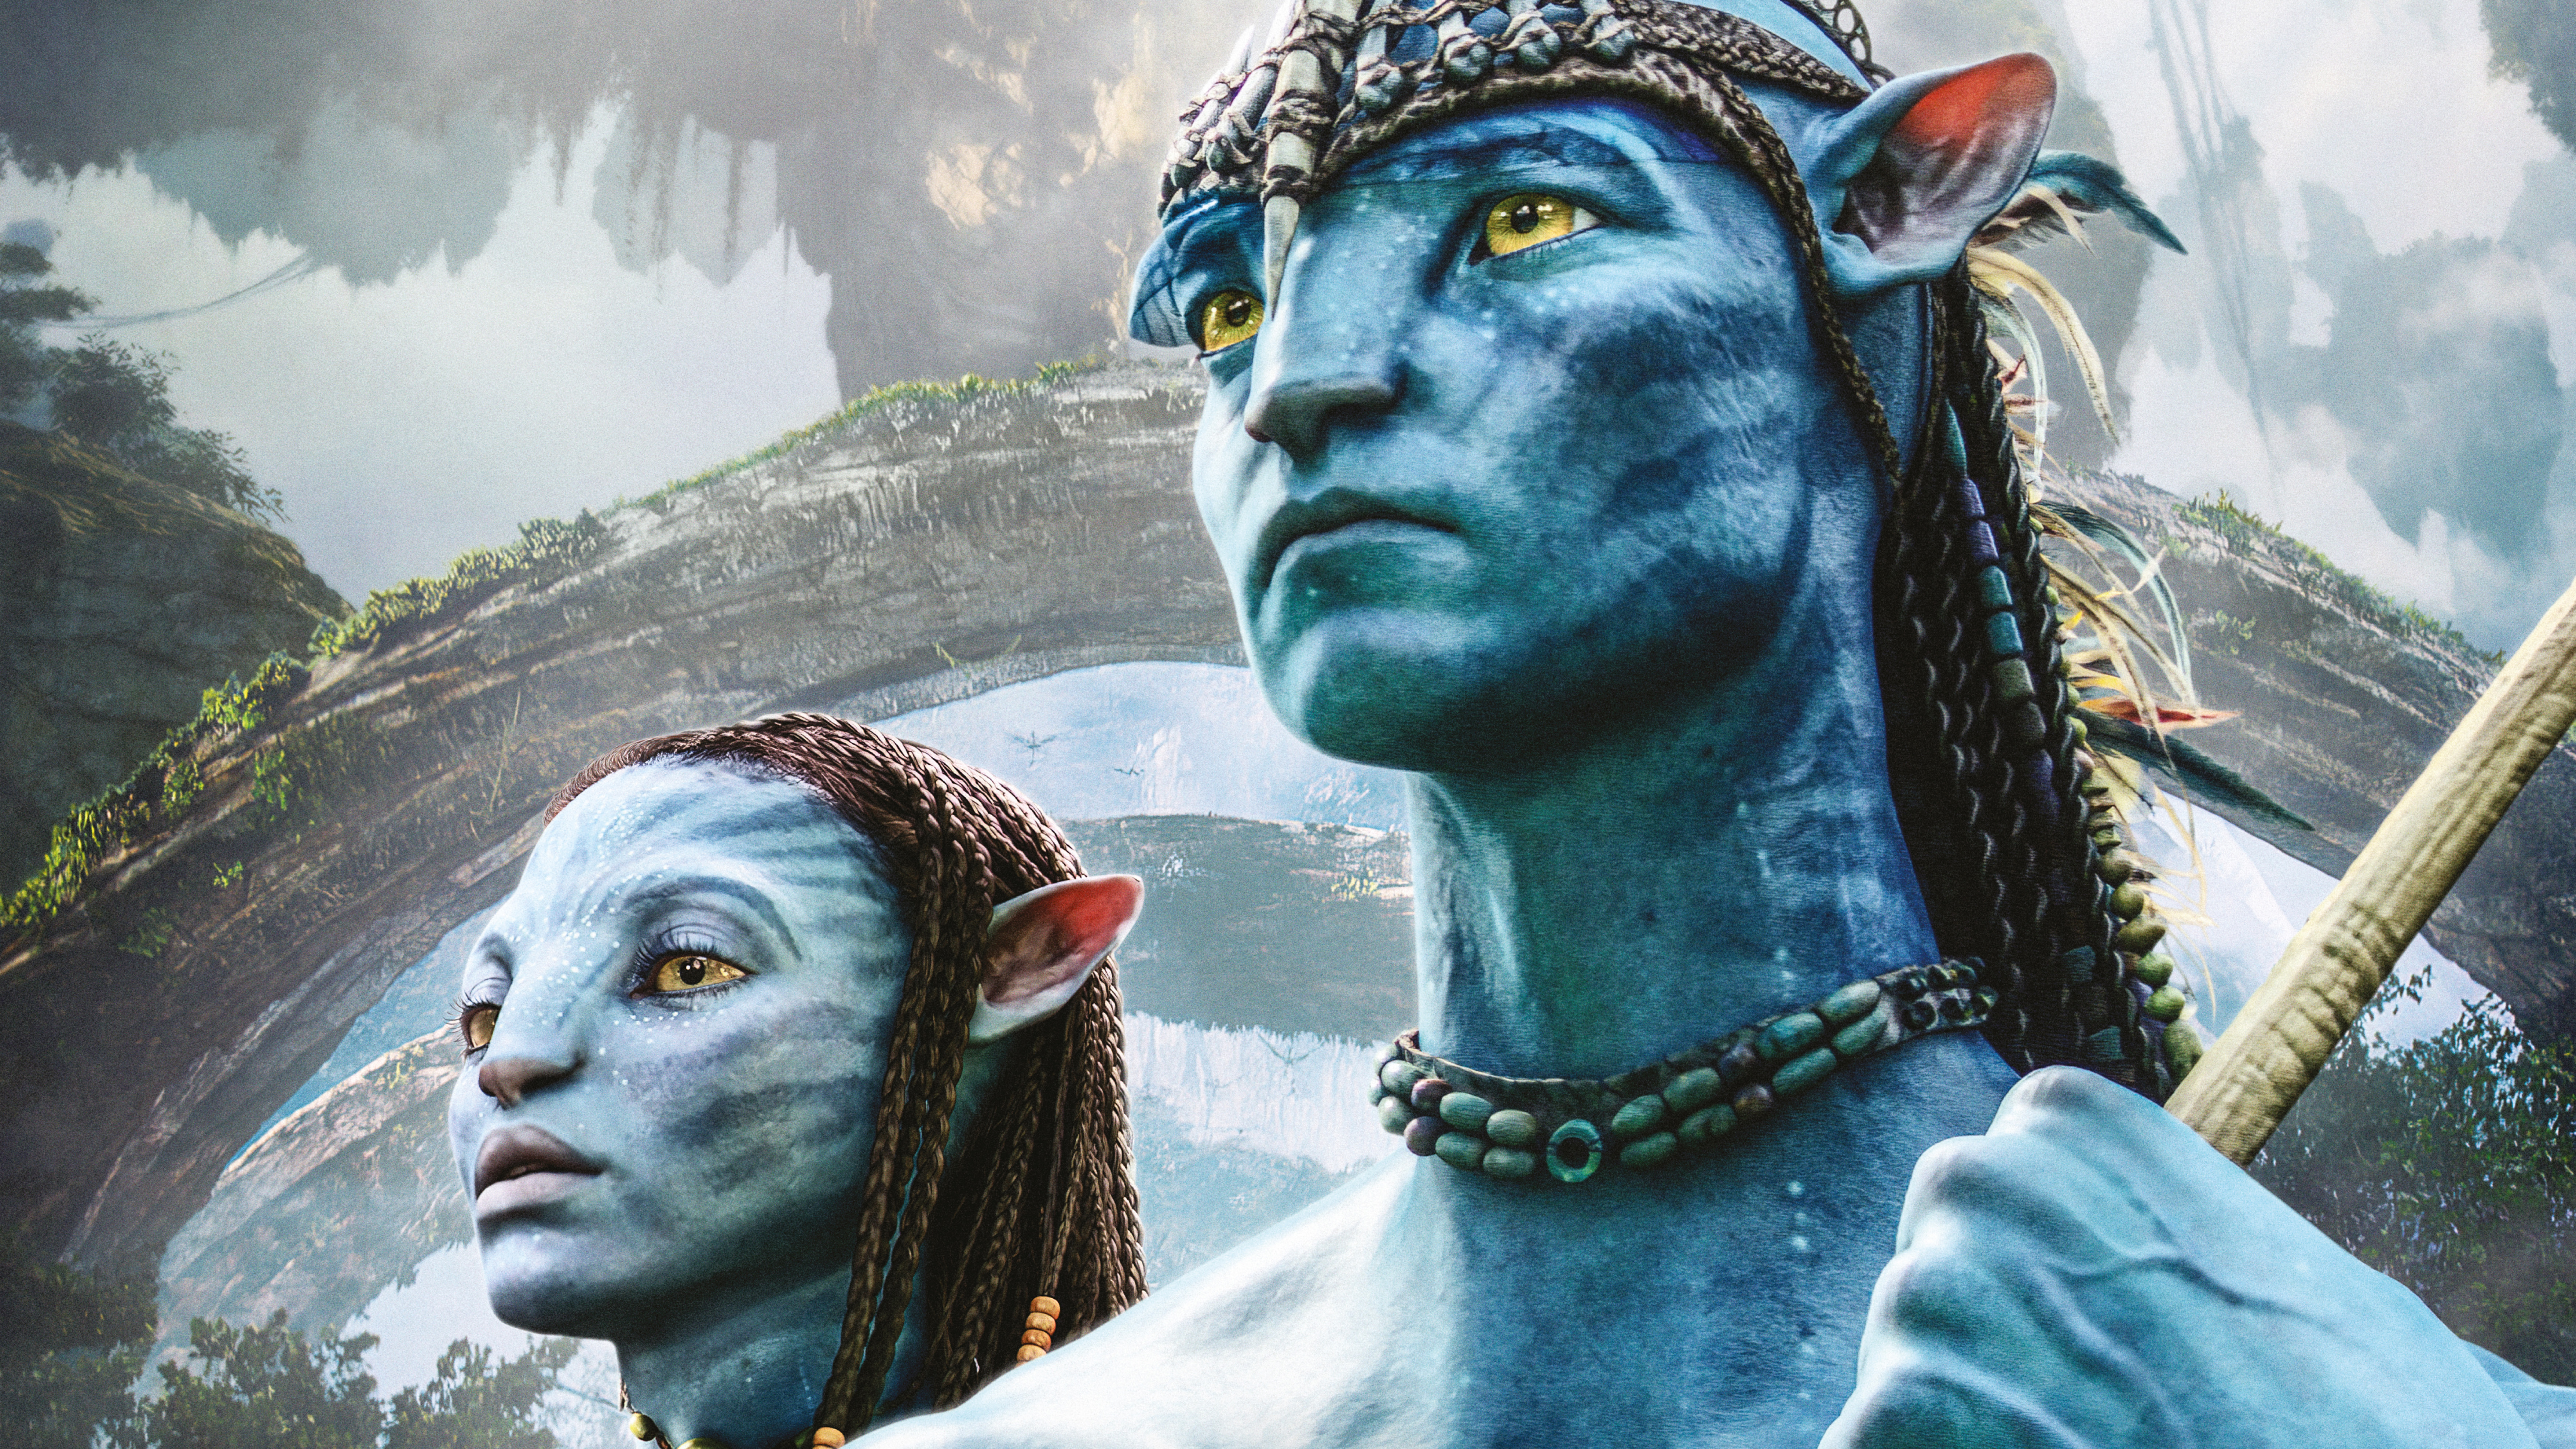 Download123𝘮ovies Avatar 2 The Way of Water 2022 FullMovie Free  MP4720p 1080p HD  Monhorloger